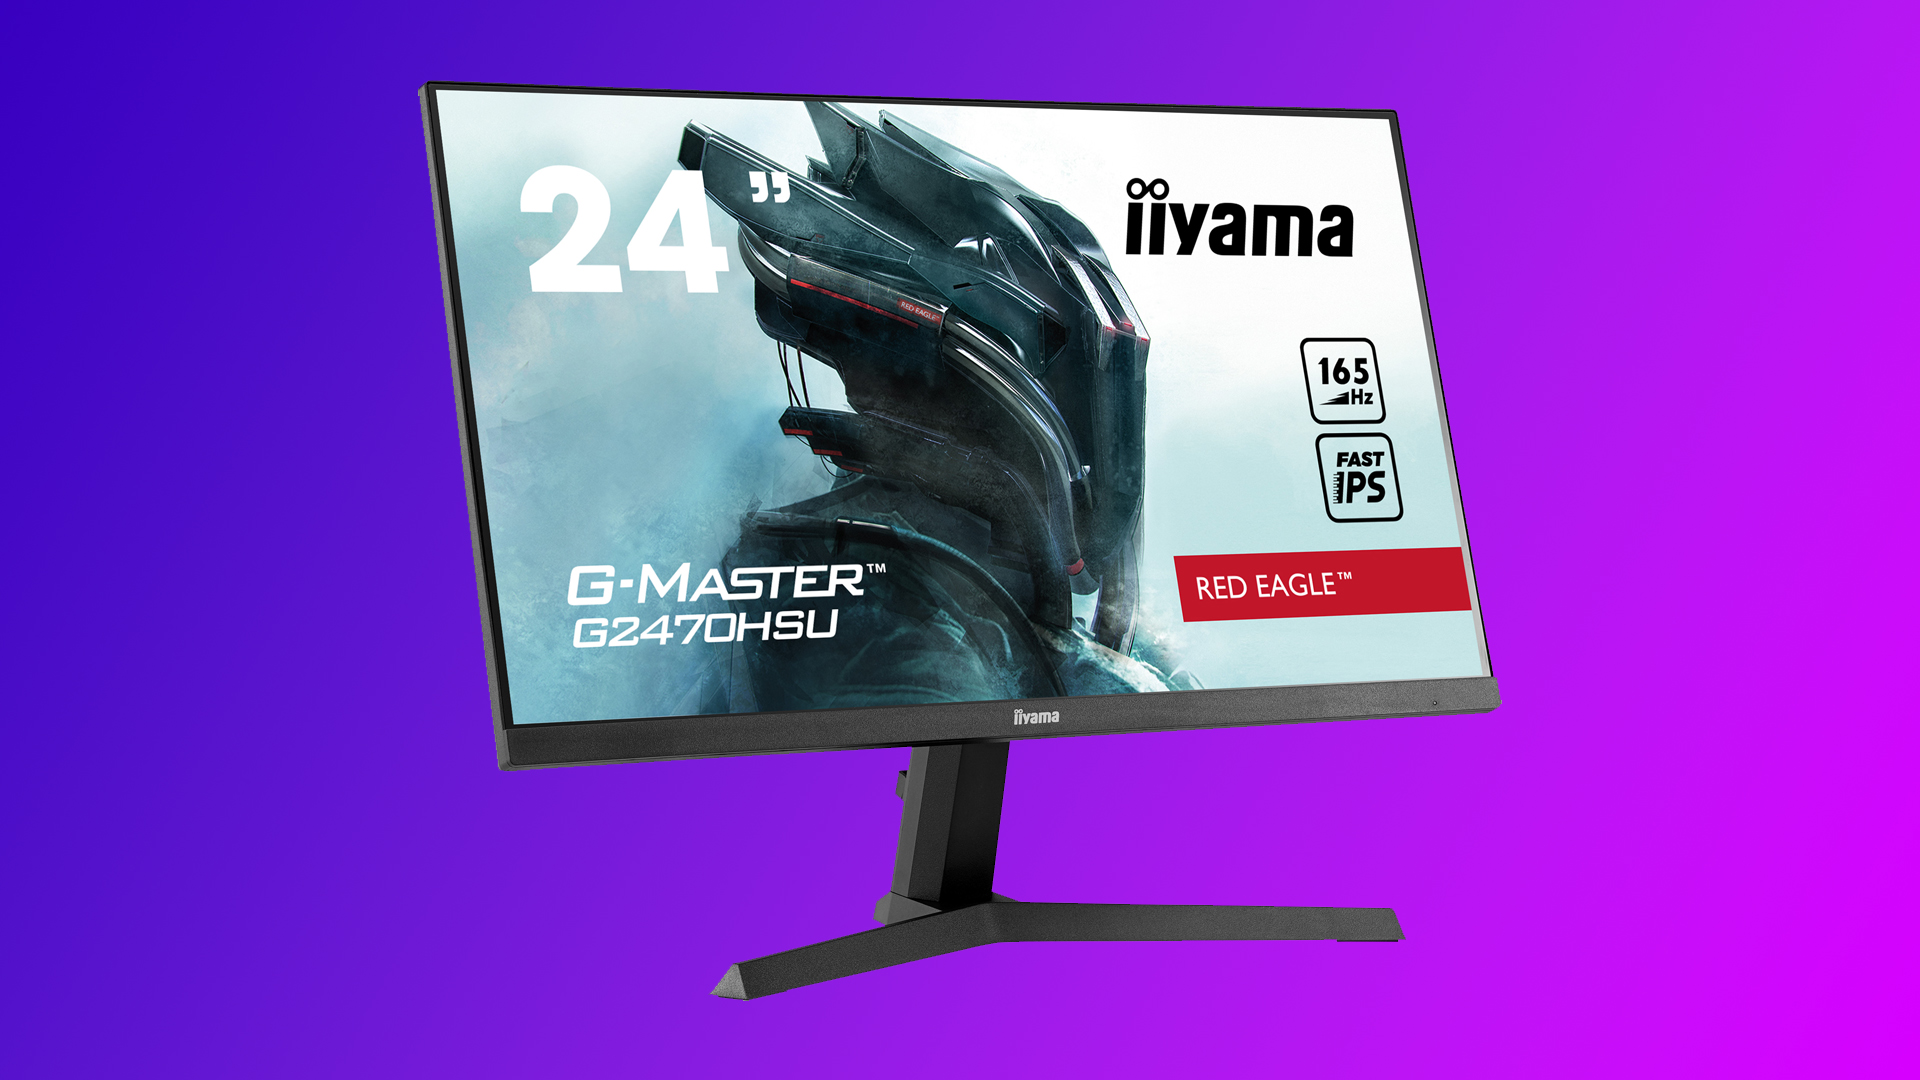 Iiyama G-Master : cet écran PC gamer (24, 165 Hz) est à bas prix